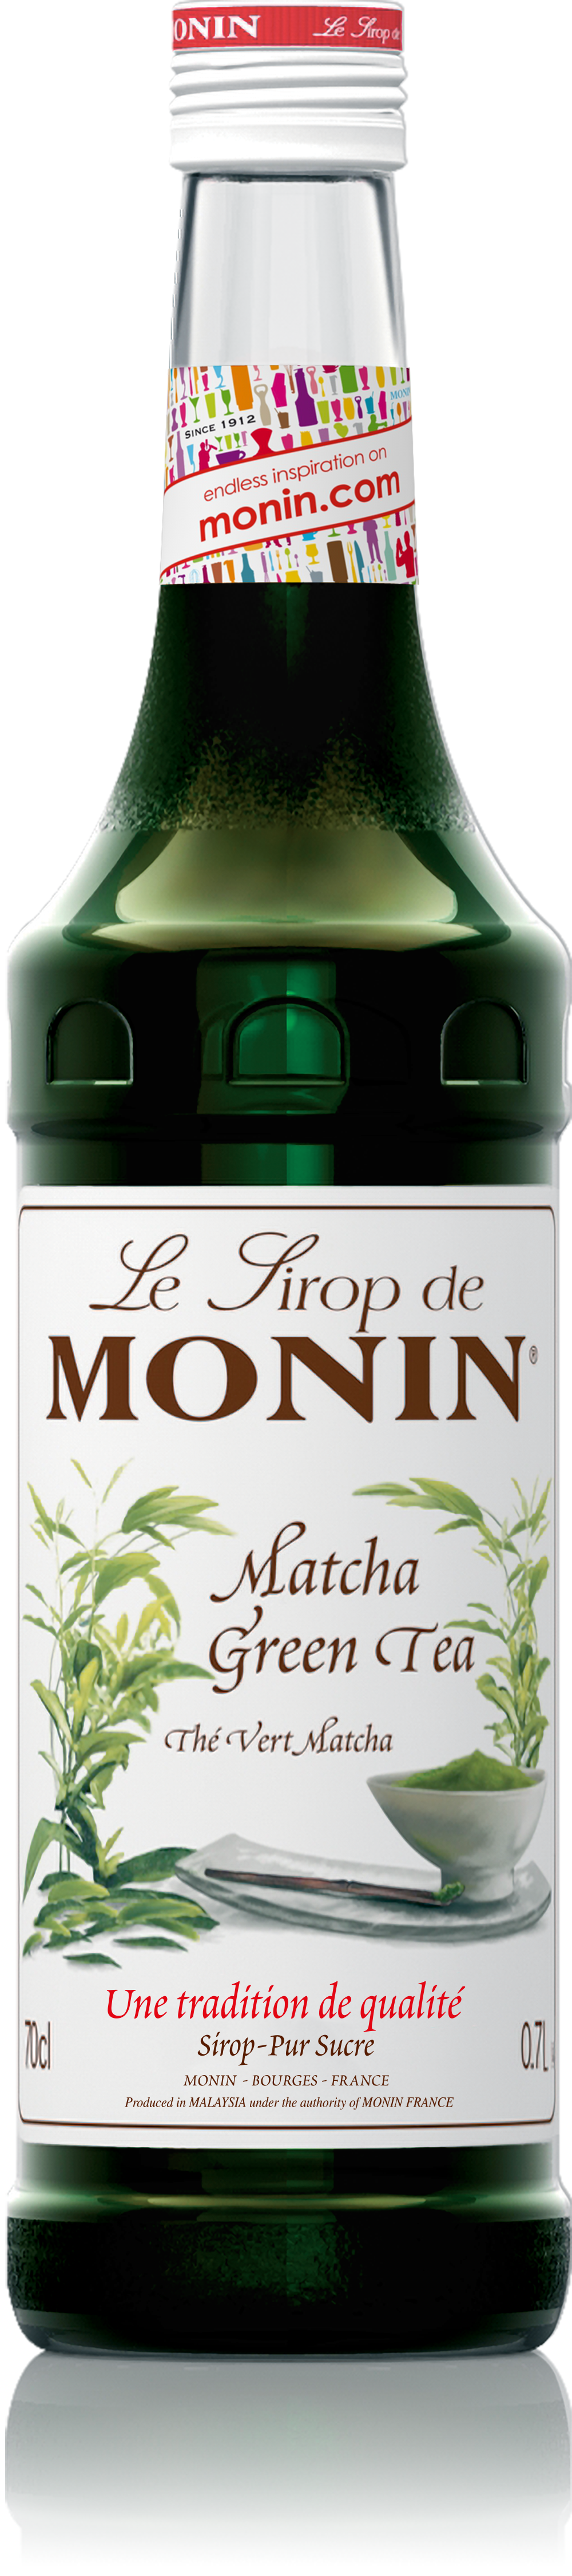 Le Sirop de MONIN Matcha Green Tea